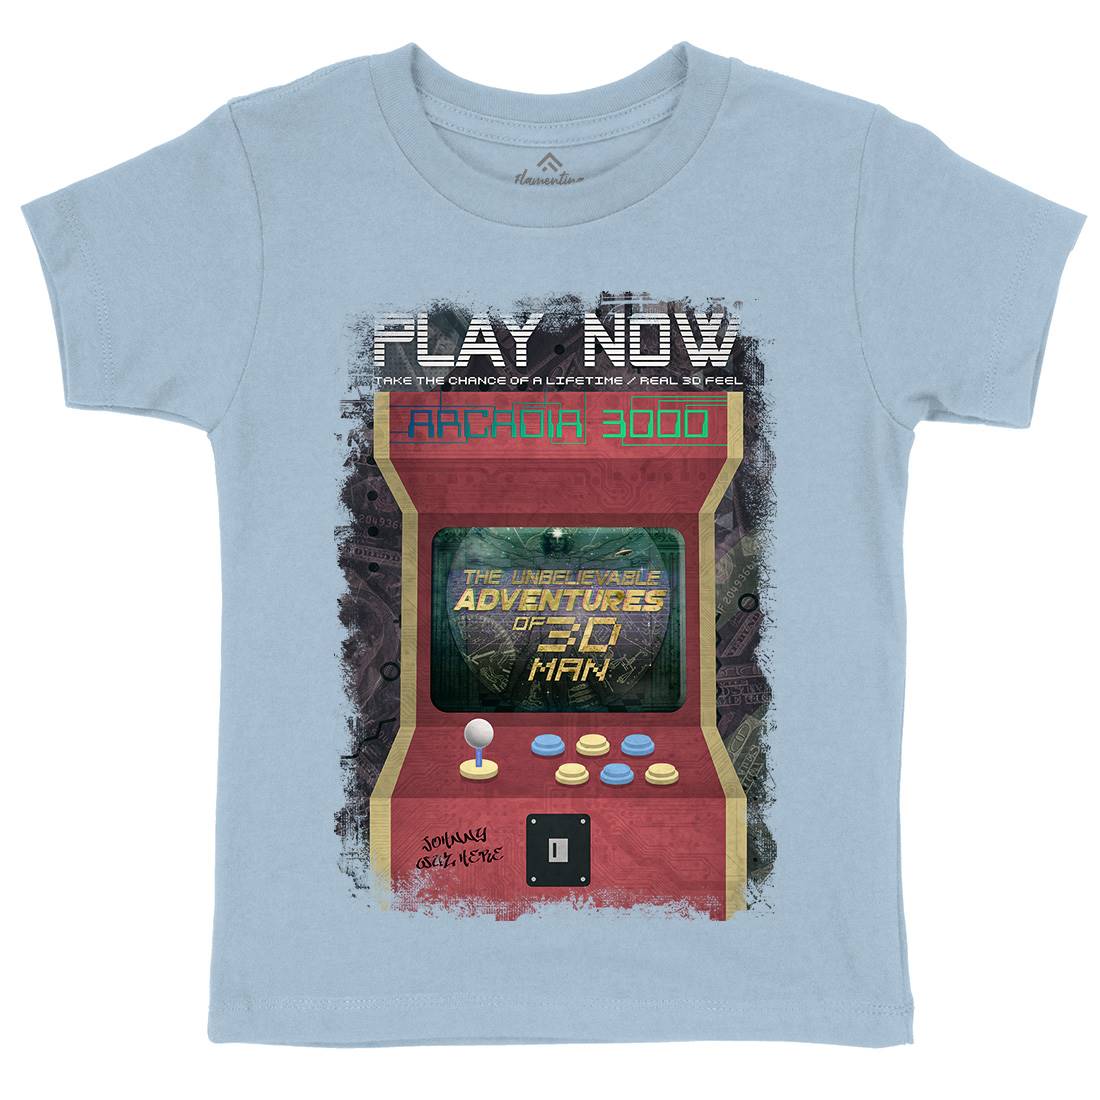 Arcadia 3000 Kids Crew Neck T-Shirt Geek A806